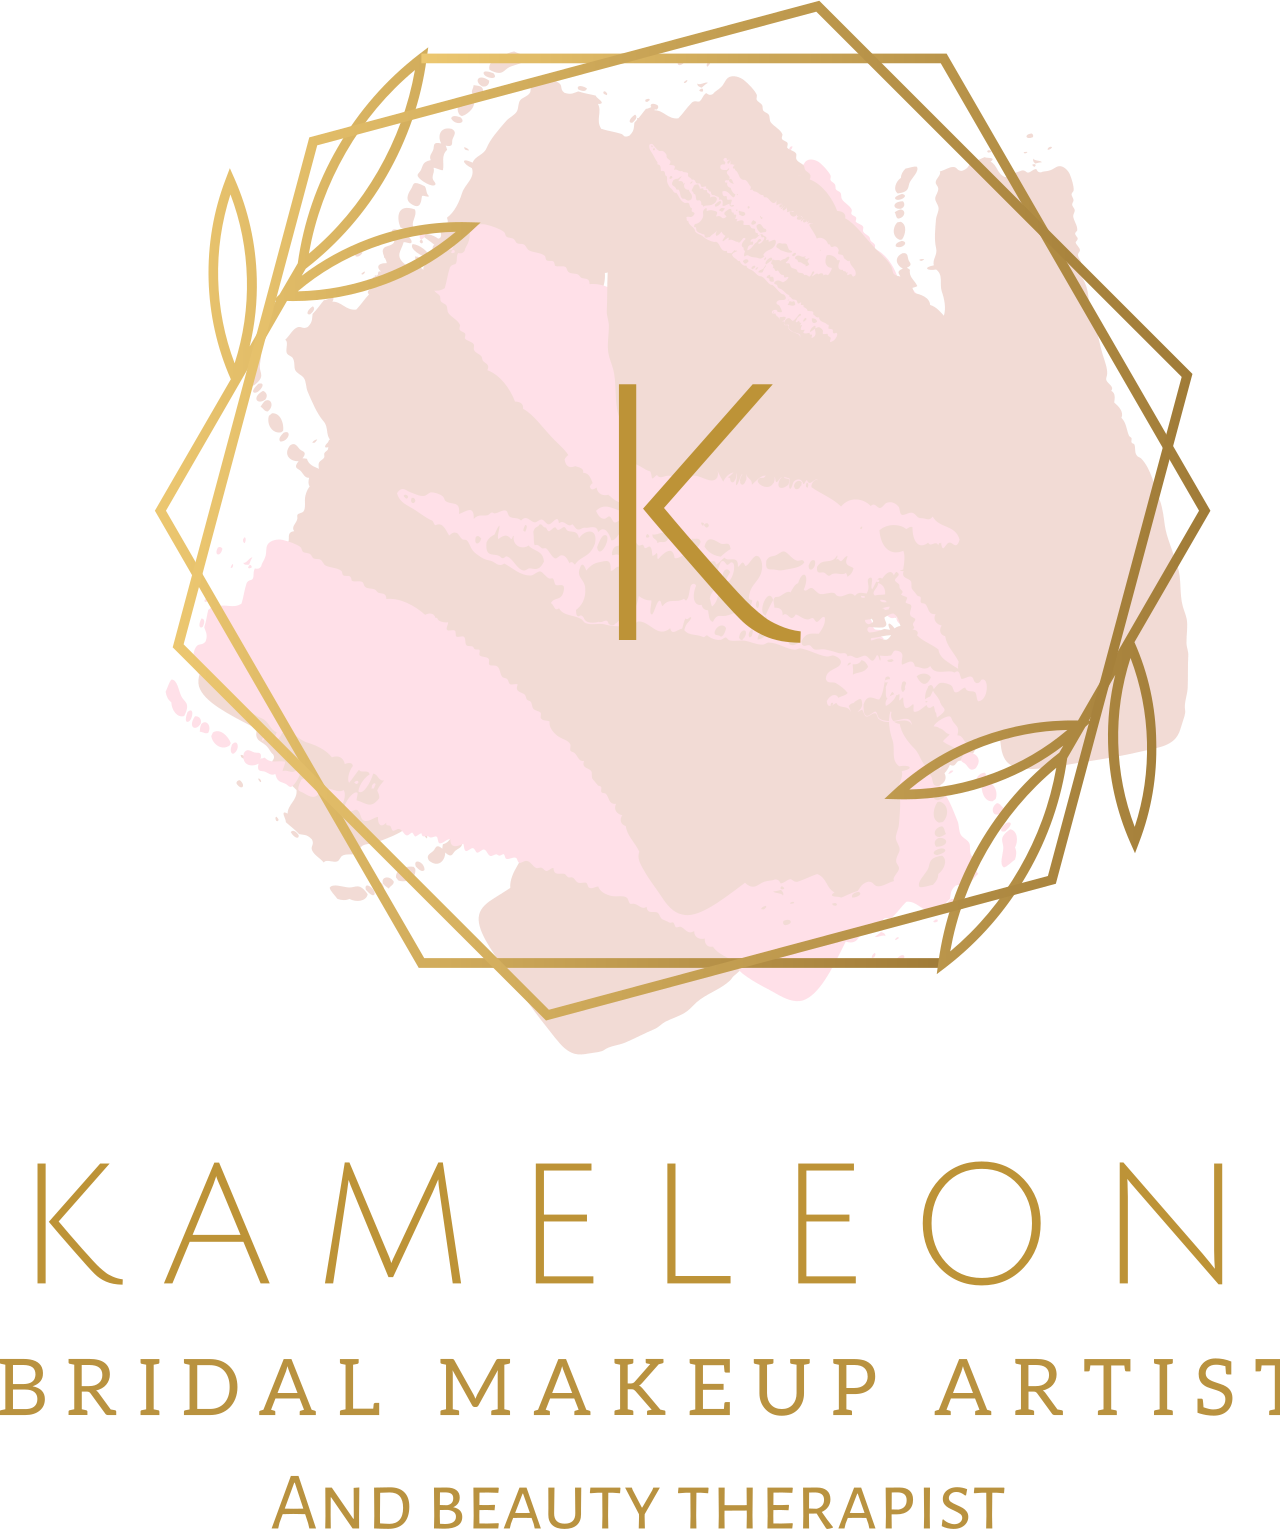 KAMELEON 's web page